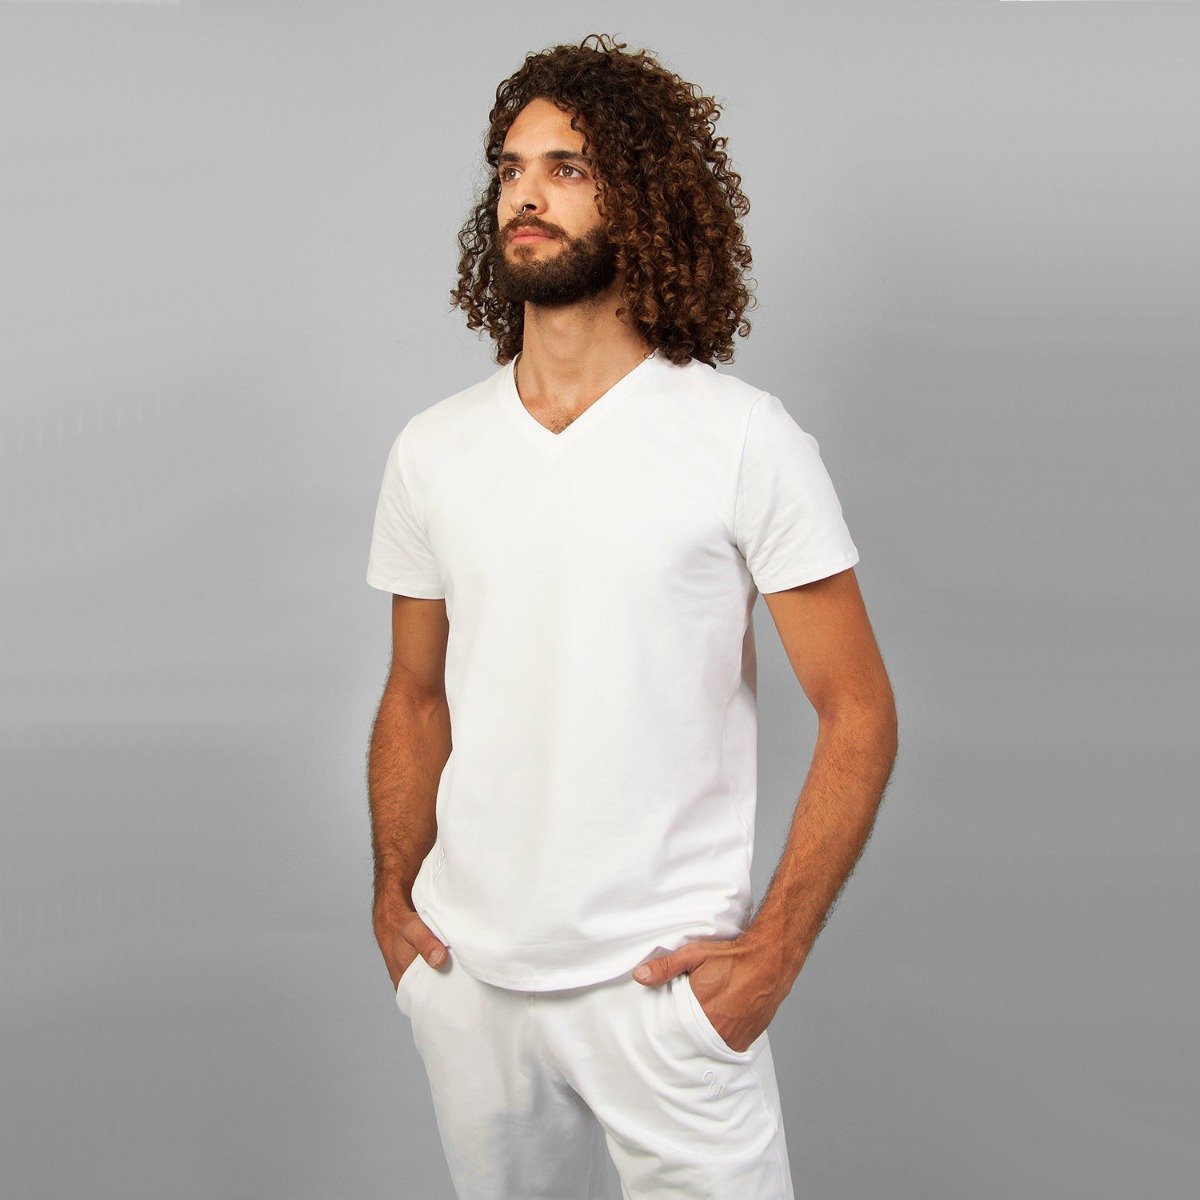 Chakra's Men's Yoga cotton printed black and white men's t-shirt